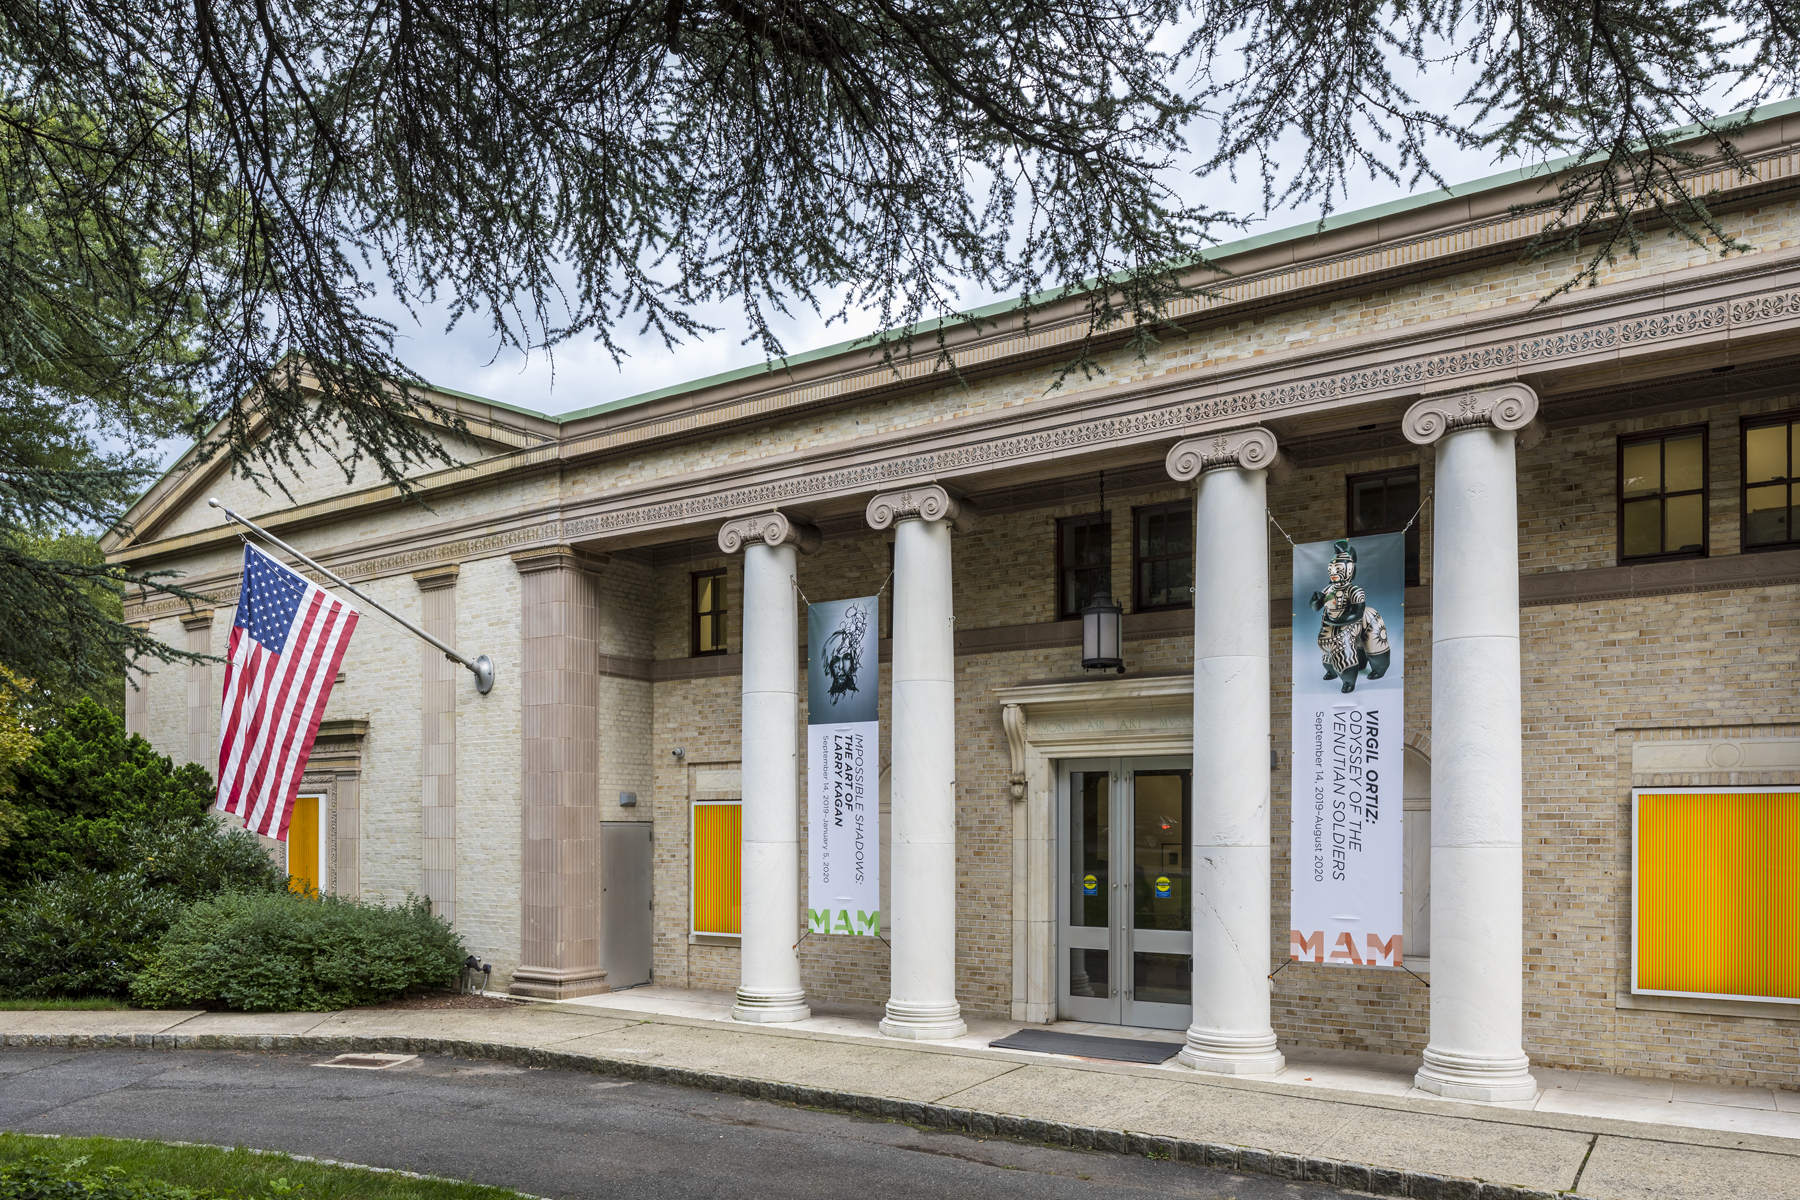 exterior of Museum fall 2019